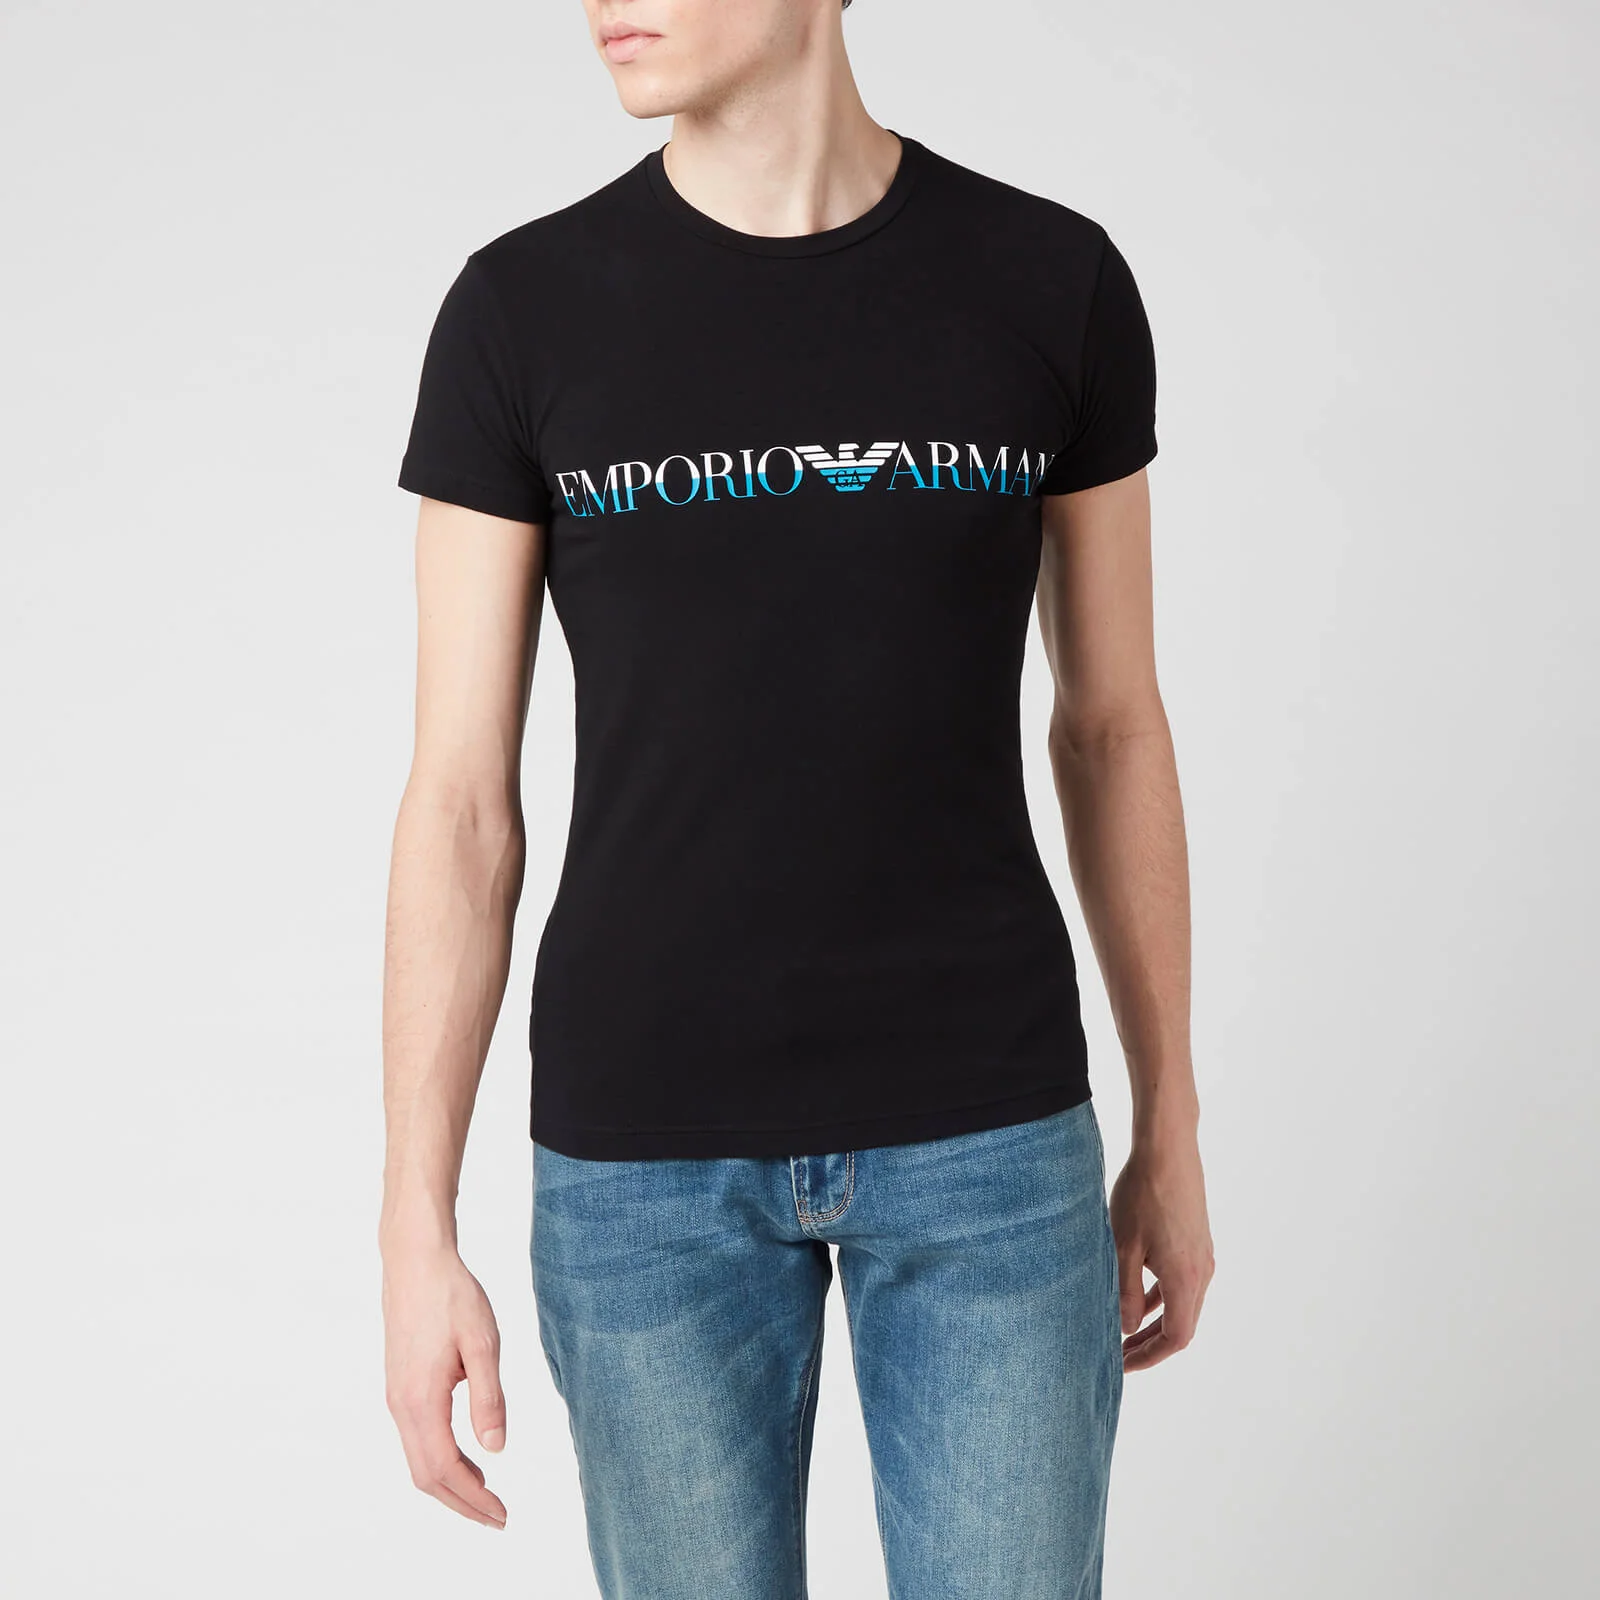 Emporio Armani Men's Megalogo T-Shirt - Black Image 1